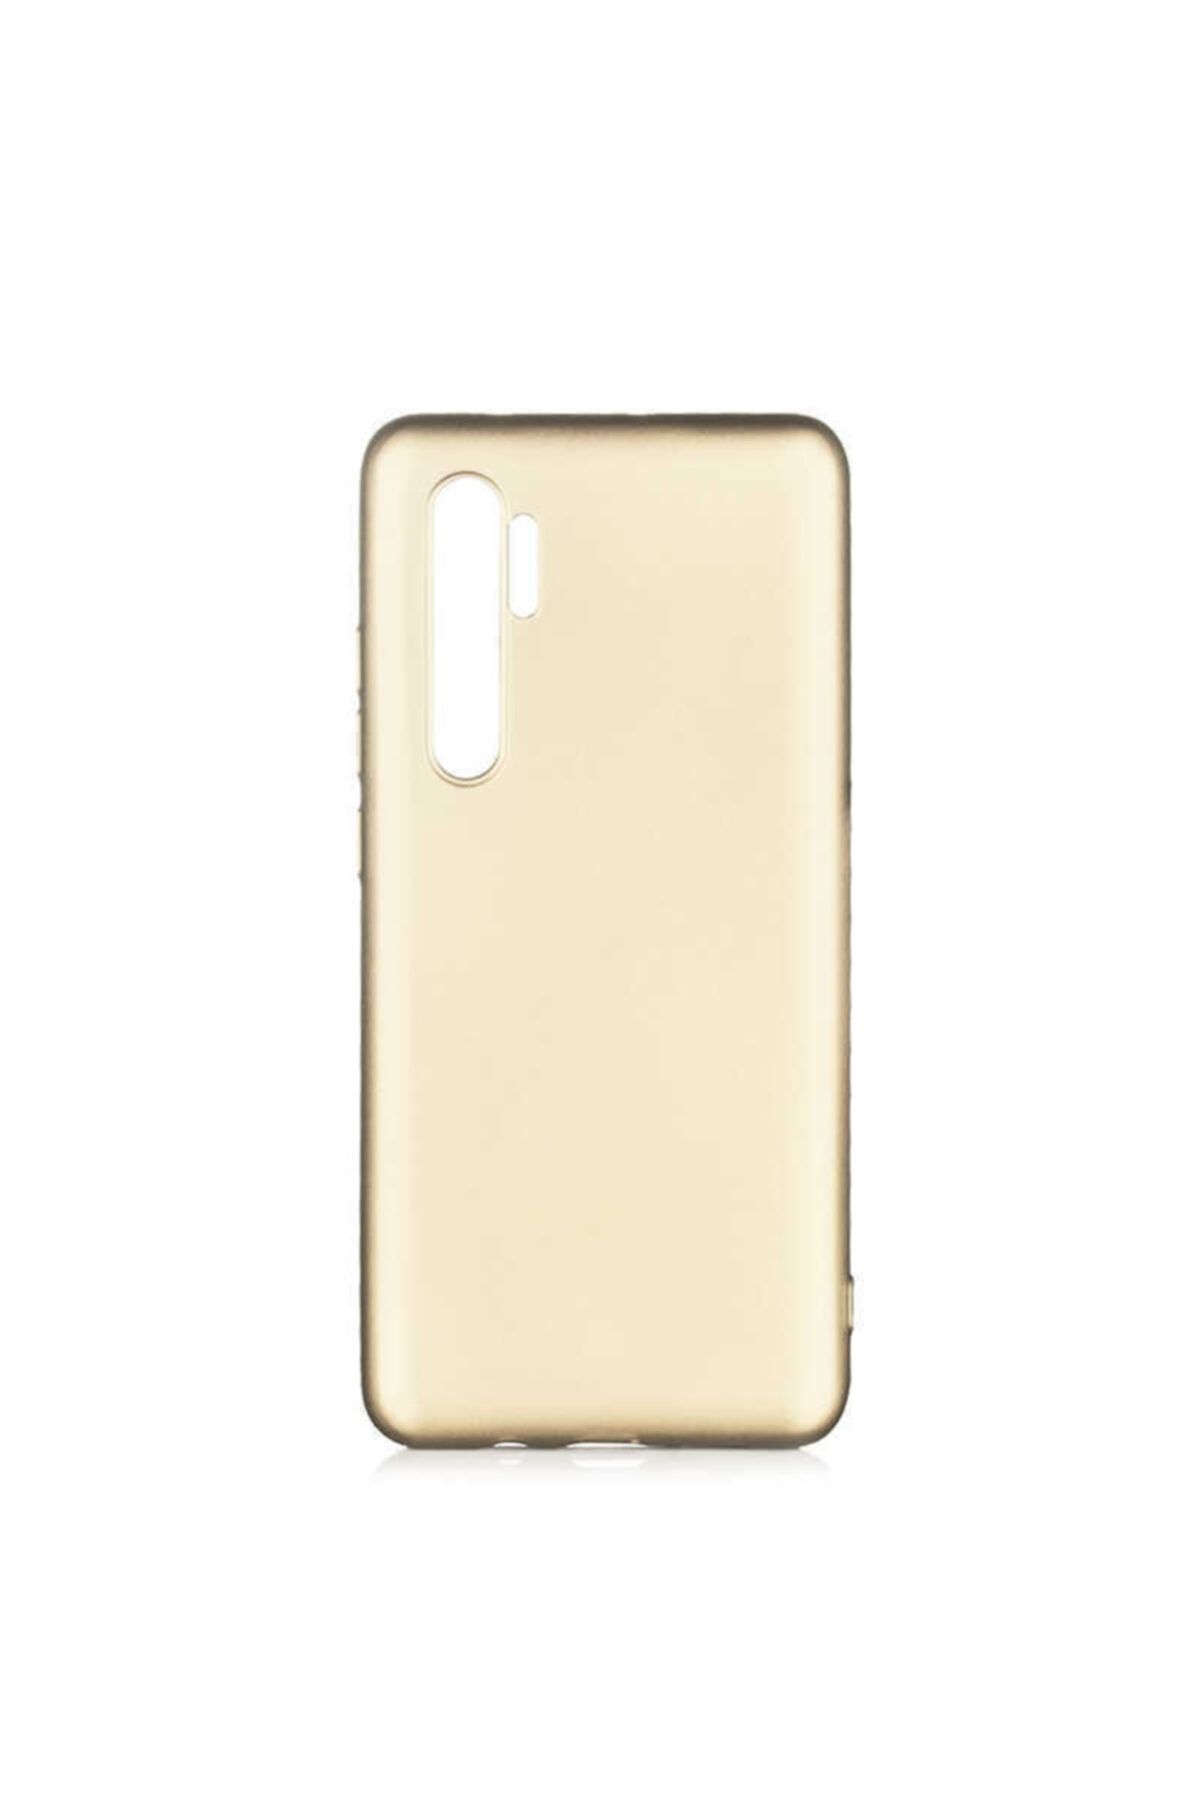 İncisoft Xiaomi Mi Note 10 Lite Kılıf Ultra Ince Silikon Yumuşak Yüzey Premier Kapak Gold